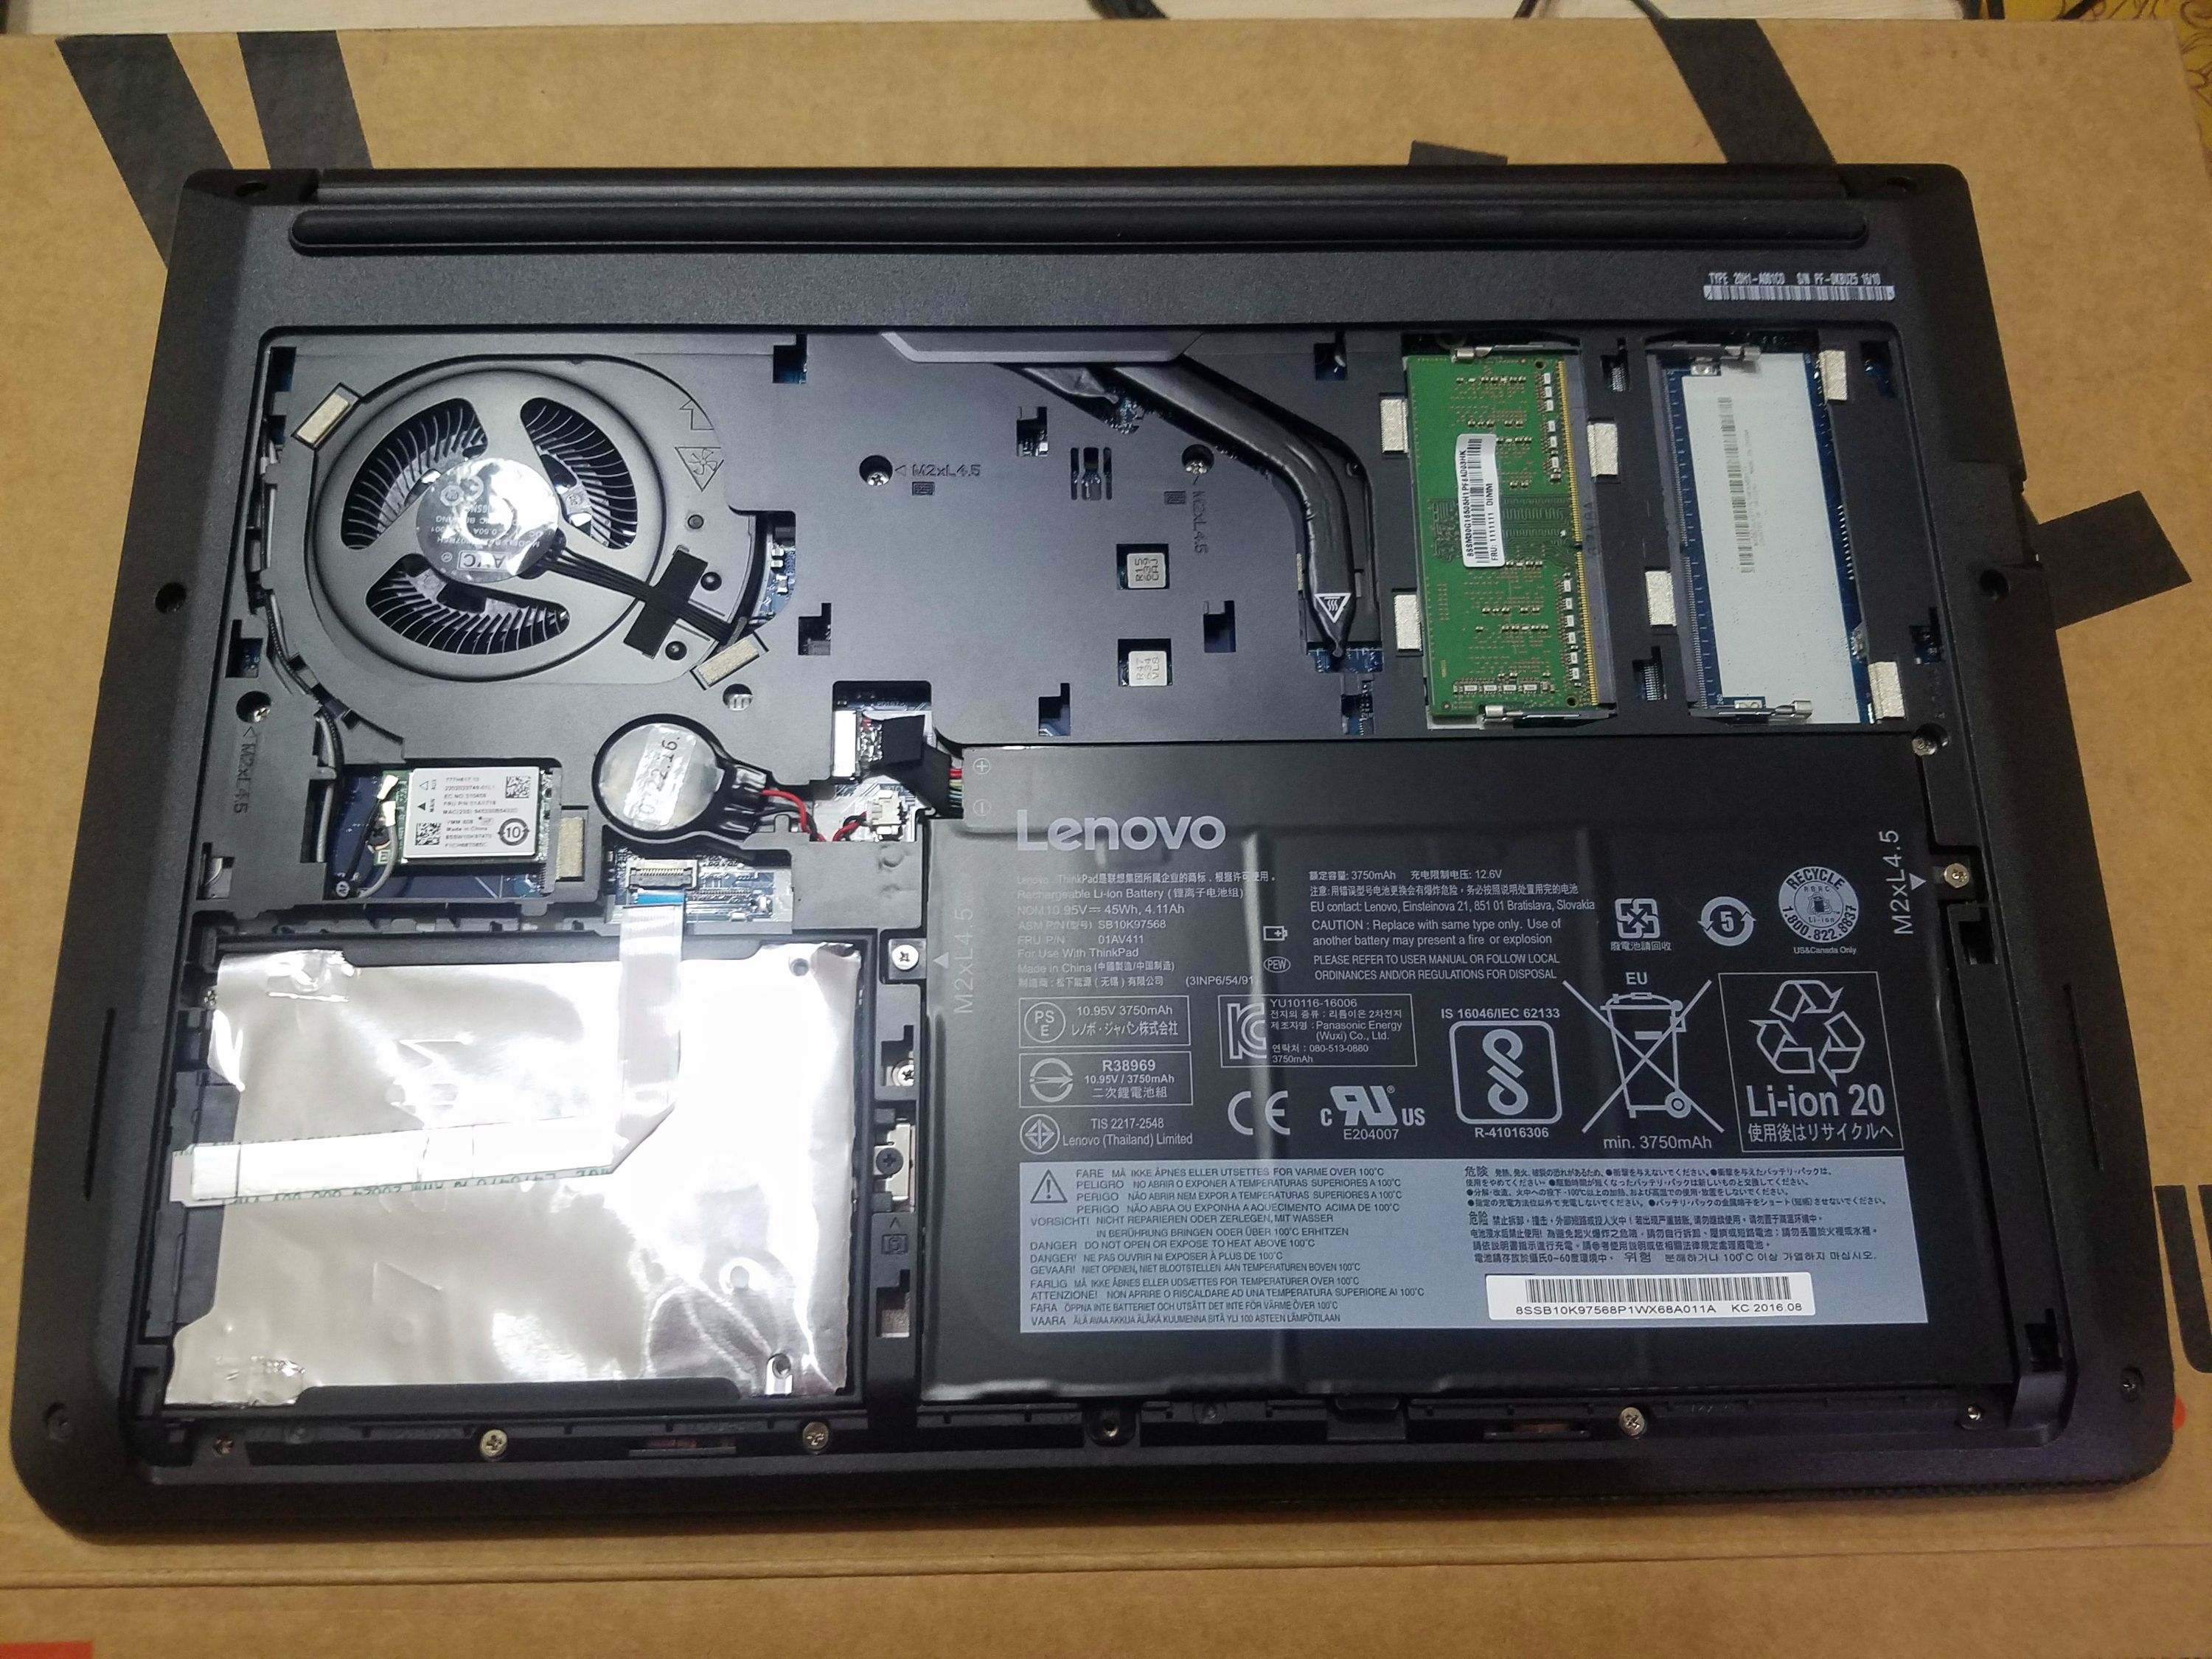 Lenovo Thinkpad E470 Disassembly and SSD, HDD, RAM upgrade options